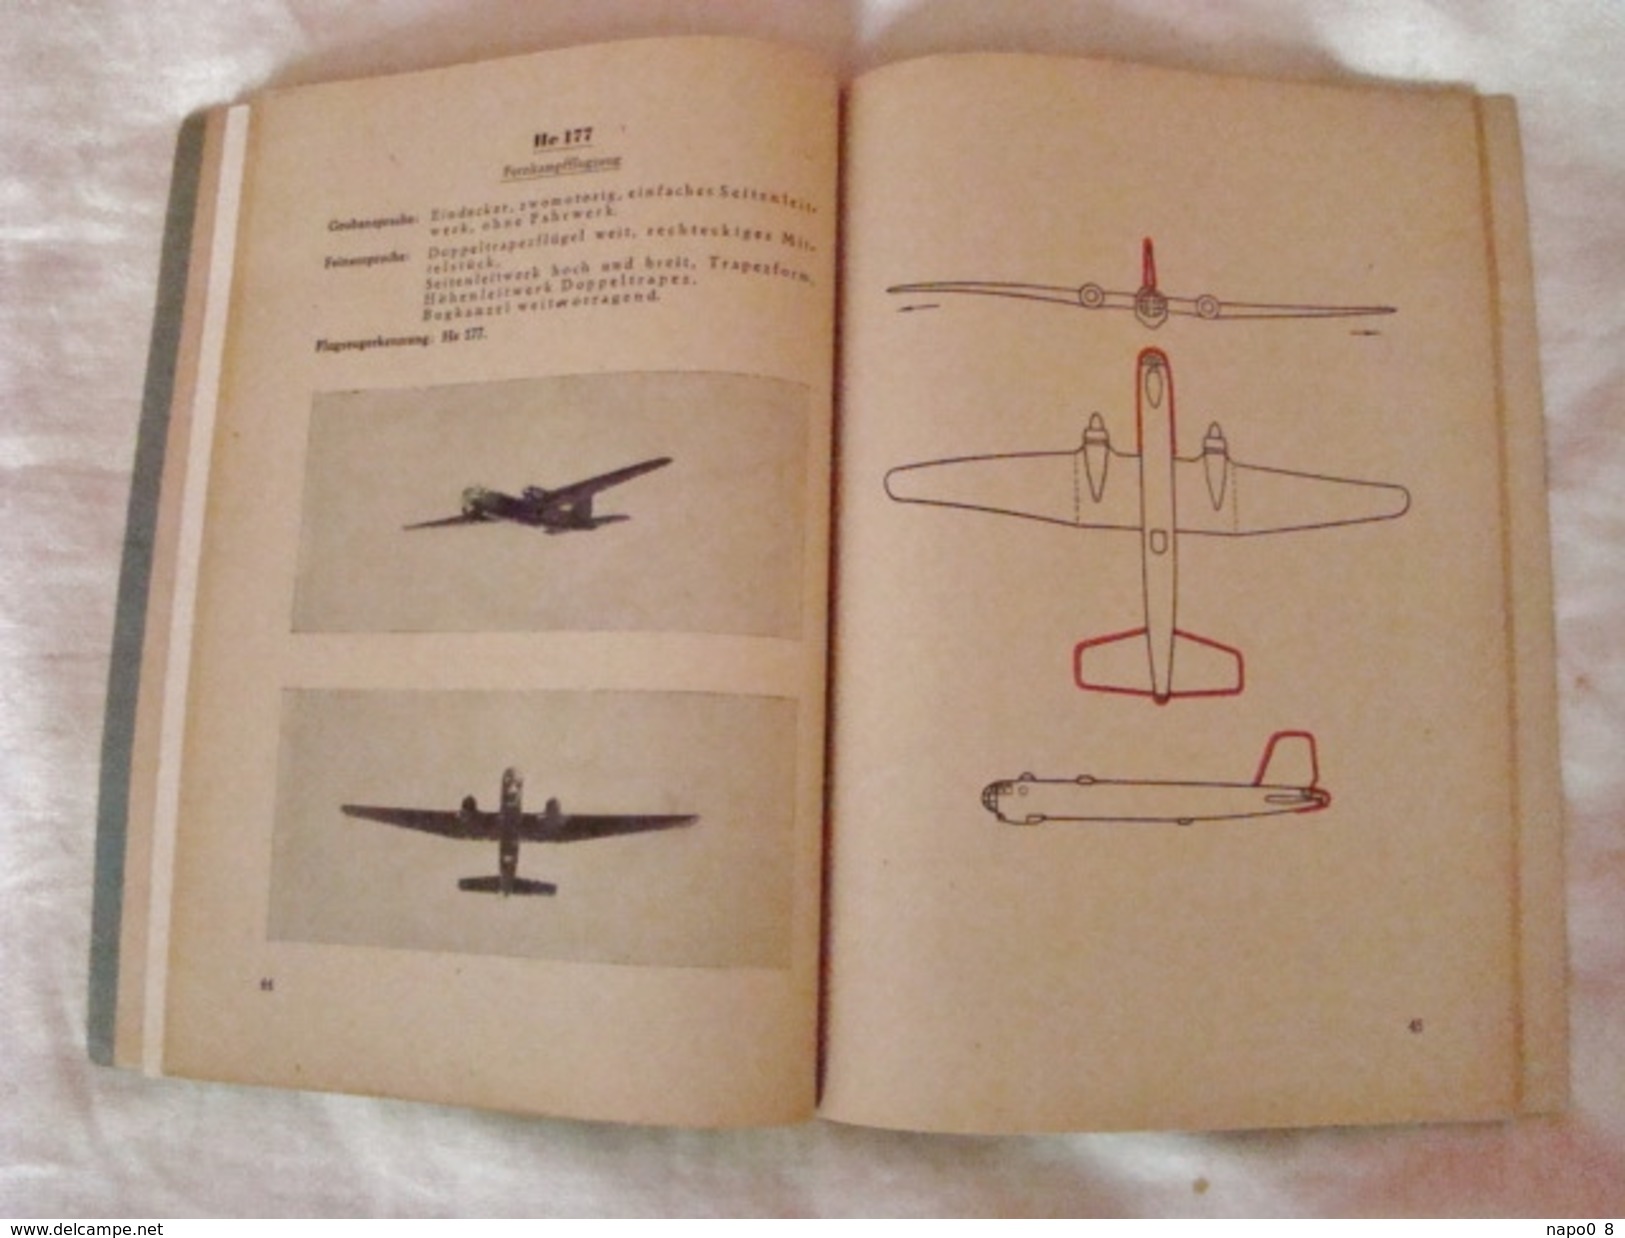 Luftfahrtkunde fascicule N°2 (1944)